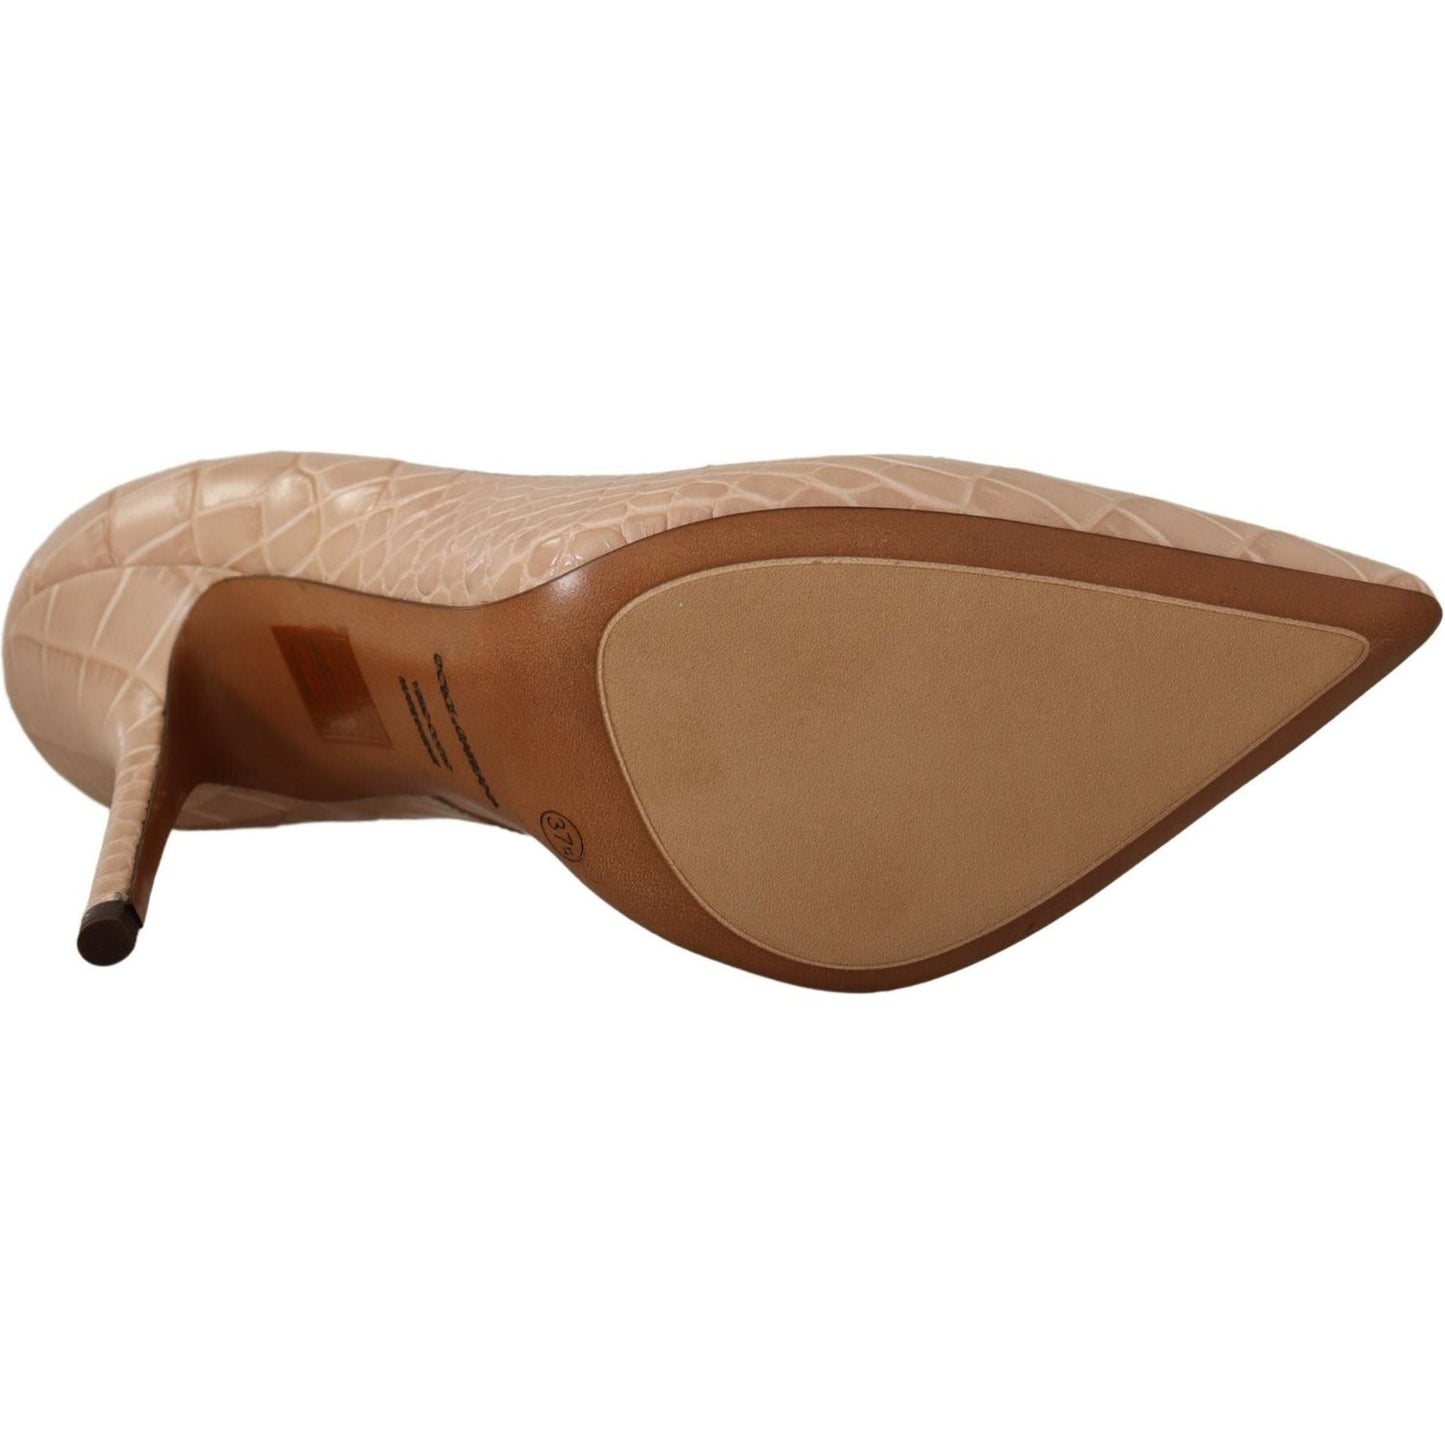 Dolce & Gabbana Elegant Beige Nude Leather Pumps beige-leather-bellucci-heels-pumps-shoes IMG_0742-scaled-04ae4c06-c52.jpg